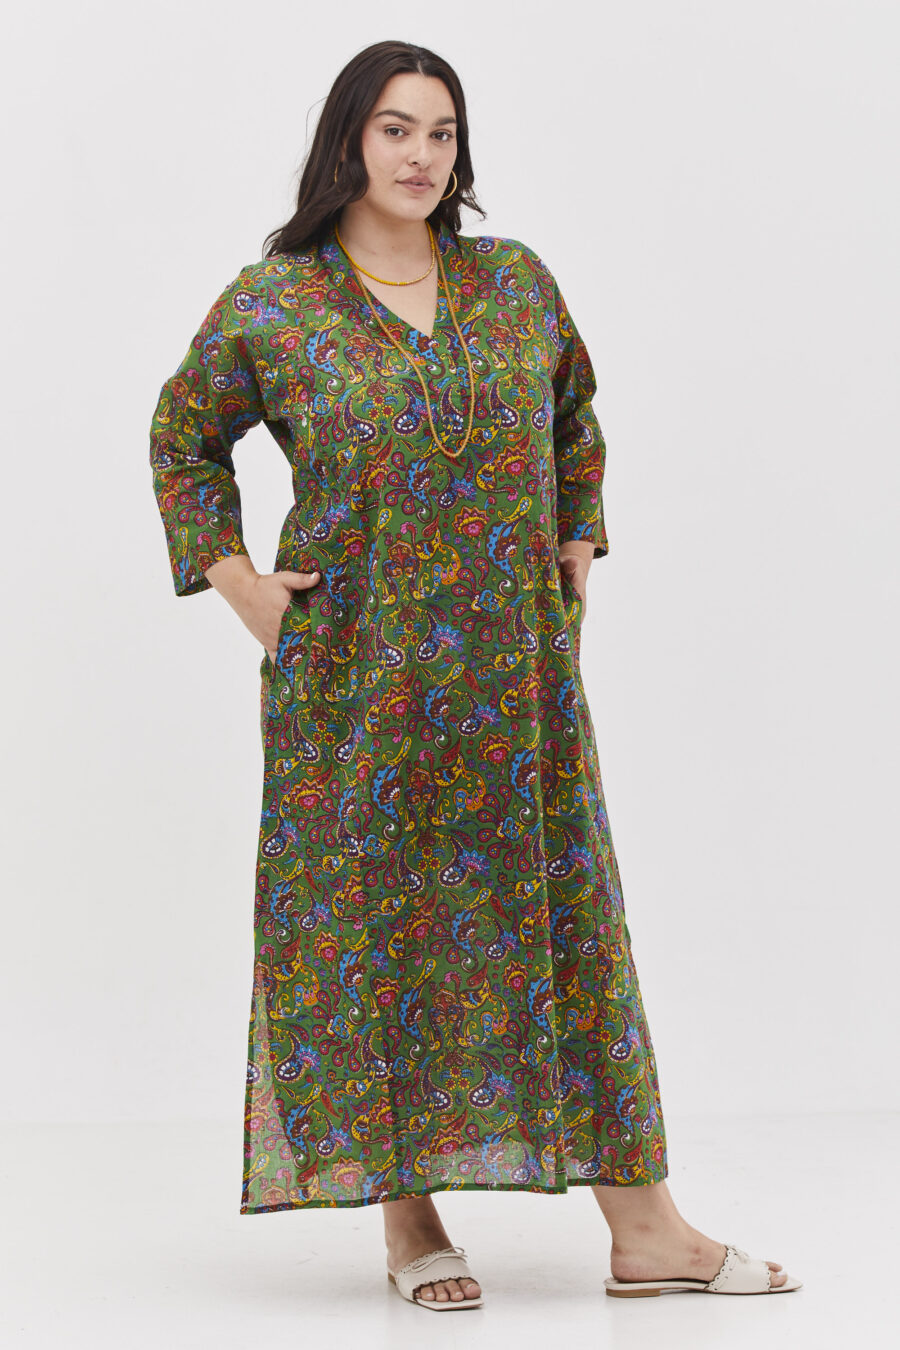 Jalabiya dress | Uniquely designed dress - Green paisley print, green dress with colorful paisley print.